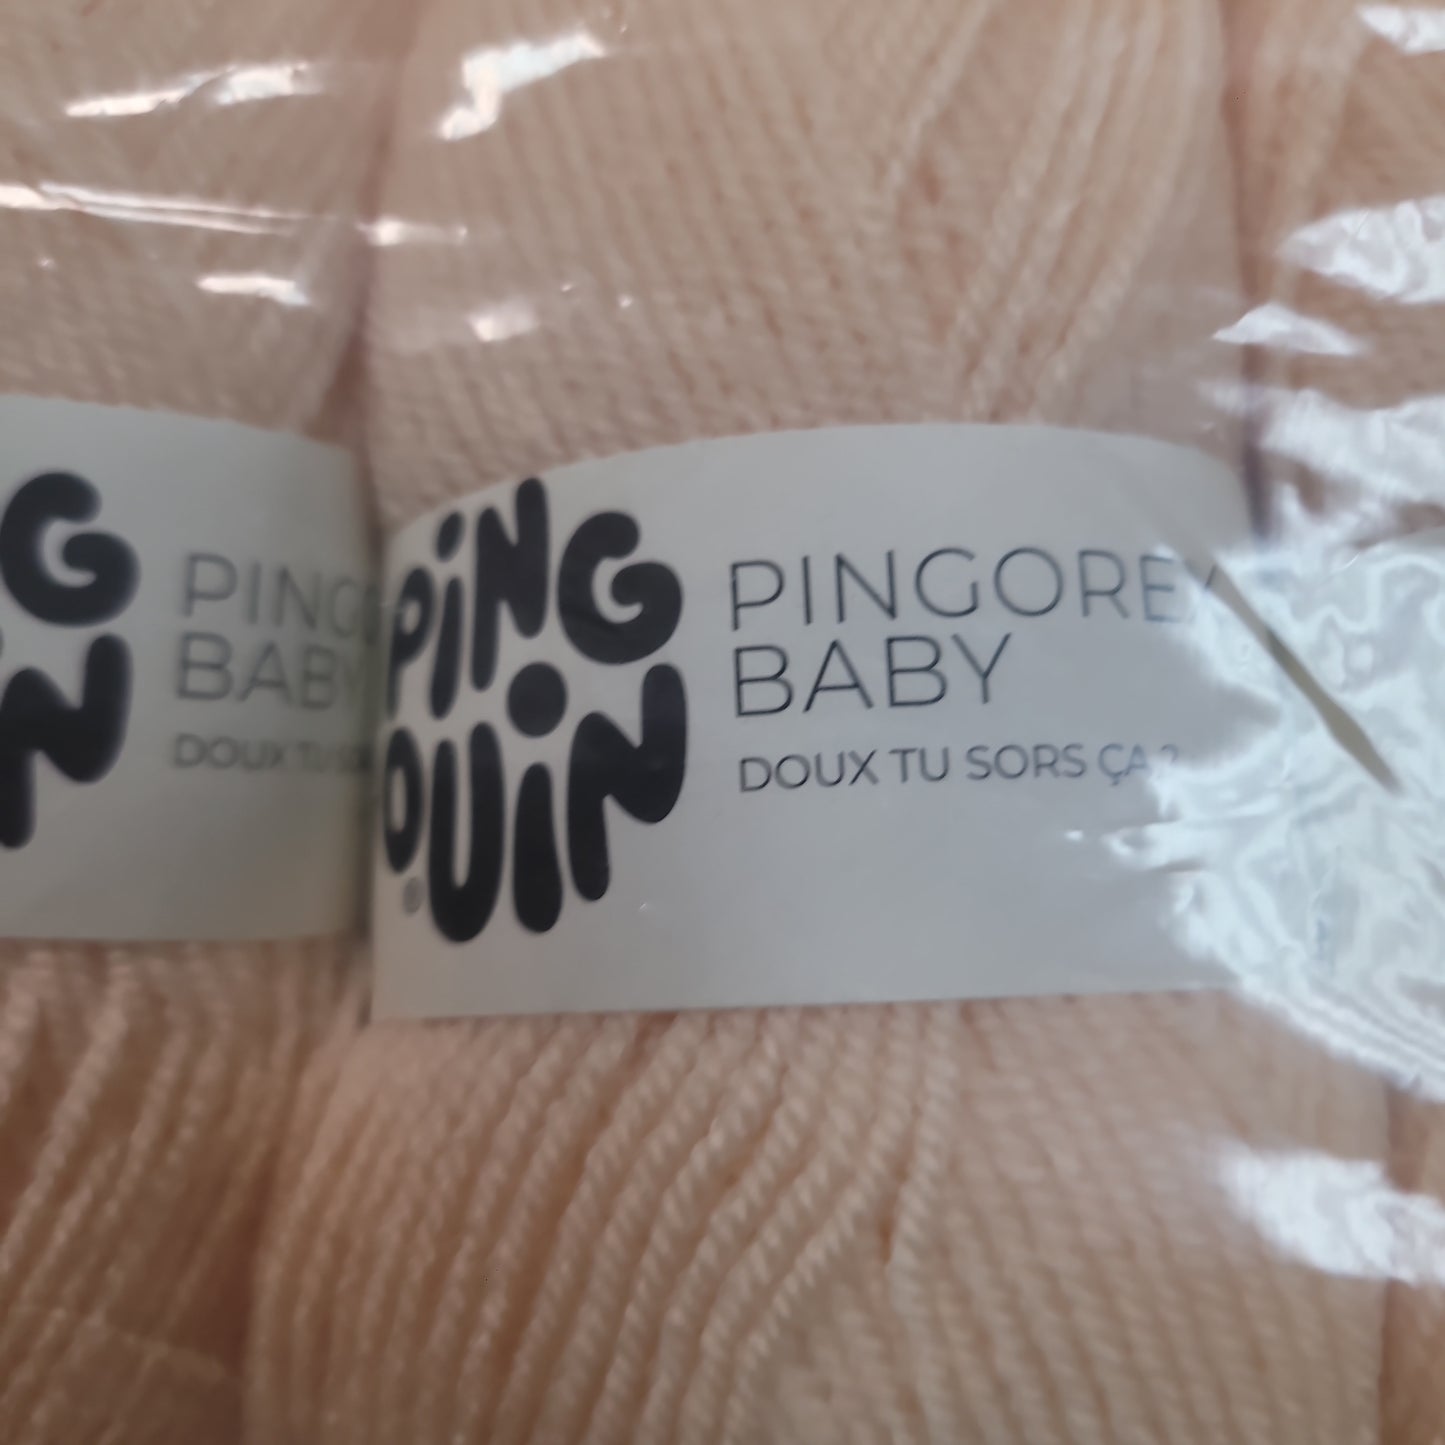 Pingorex Baby